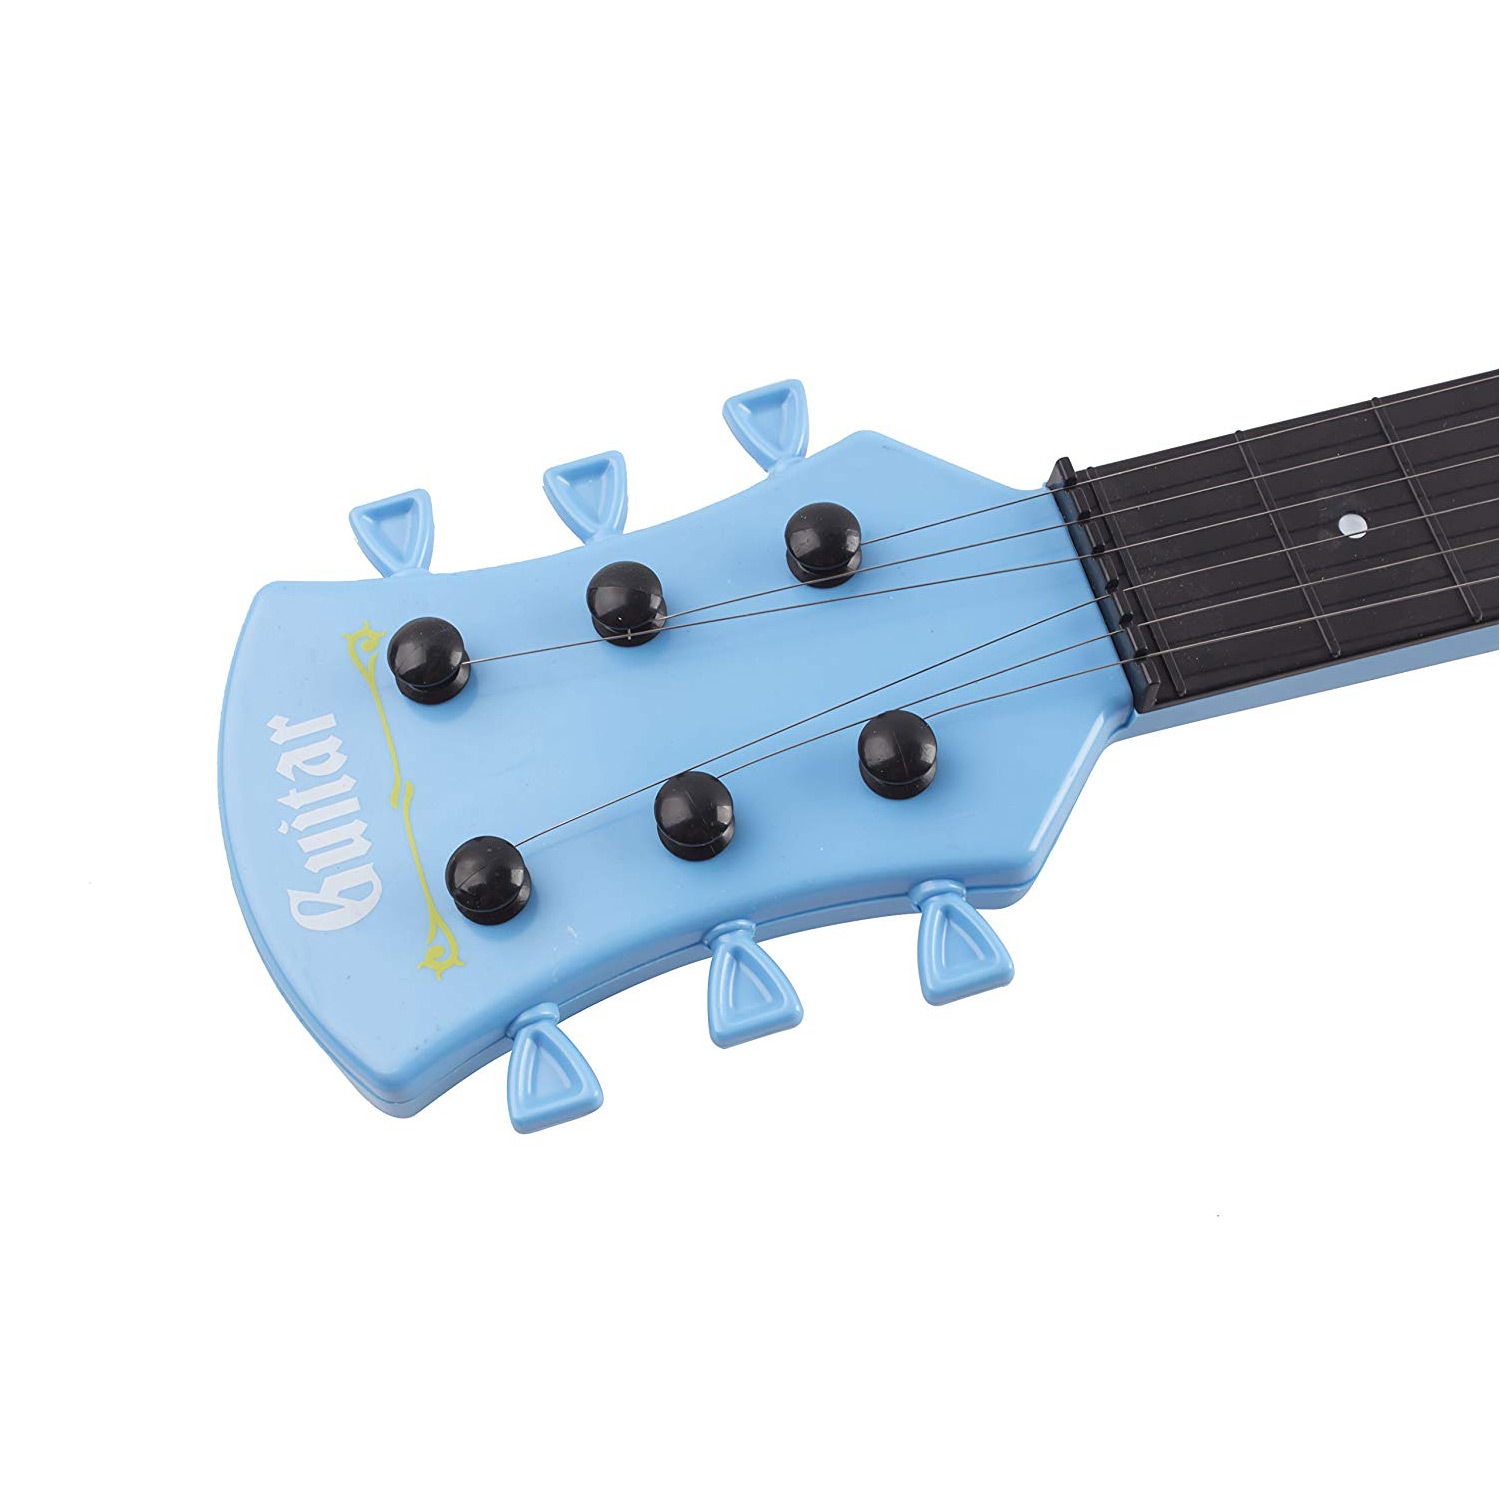 Spiderman Guitar Ukulele Toy Rock Star musical instruments 